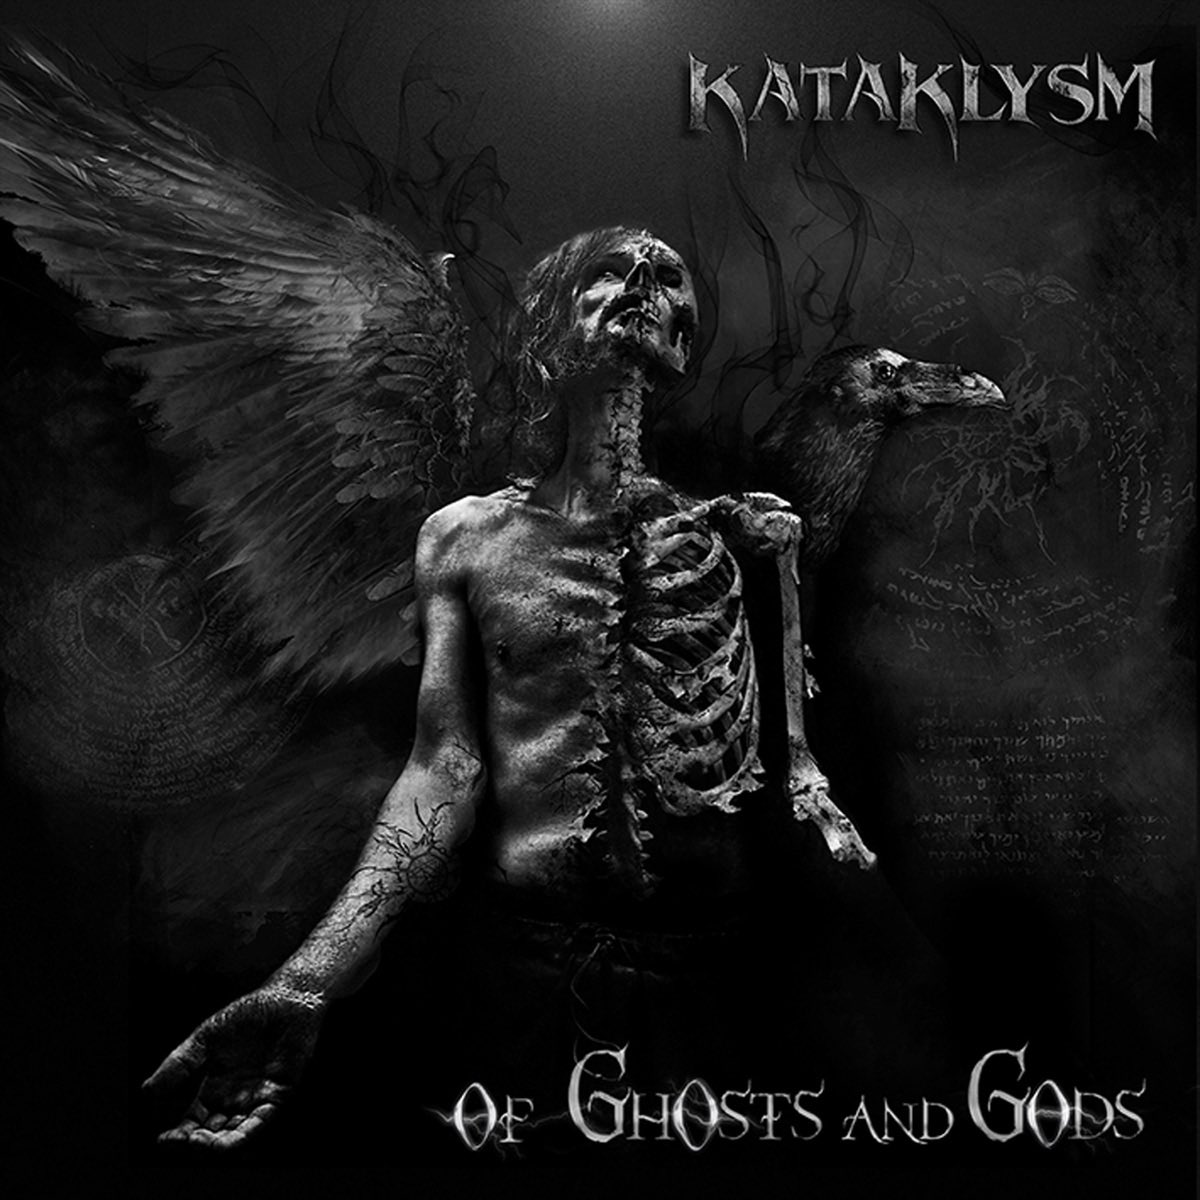 #Kataklysm #metal #music #OfGhostsAndGods #metalhead #Deathmetal #melodicdeathmetal #album #vinyl #cd #hornsup #StayHeavy #MusicIsLife